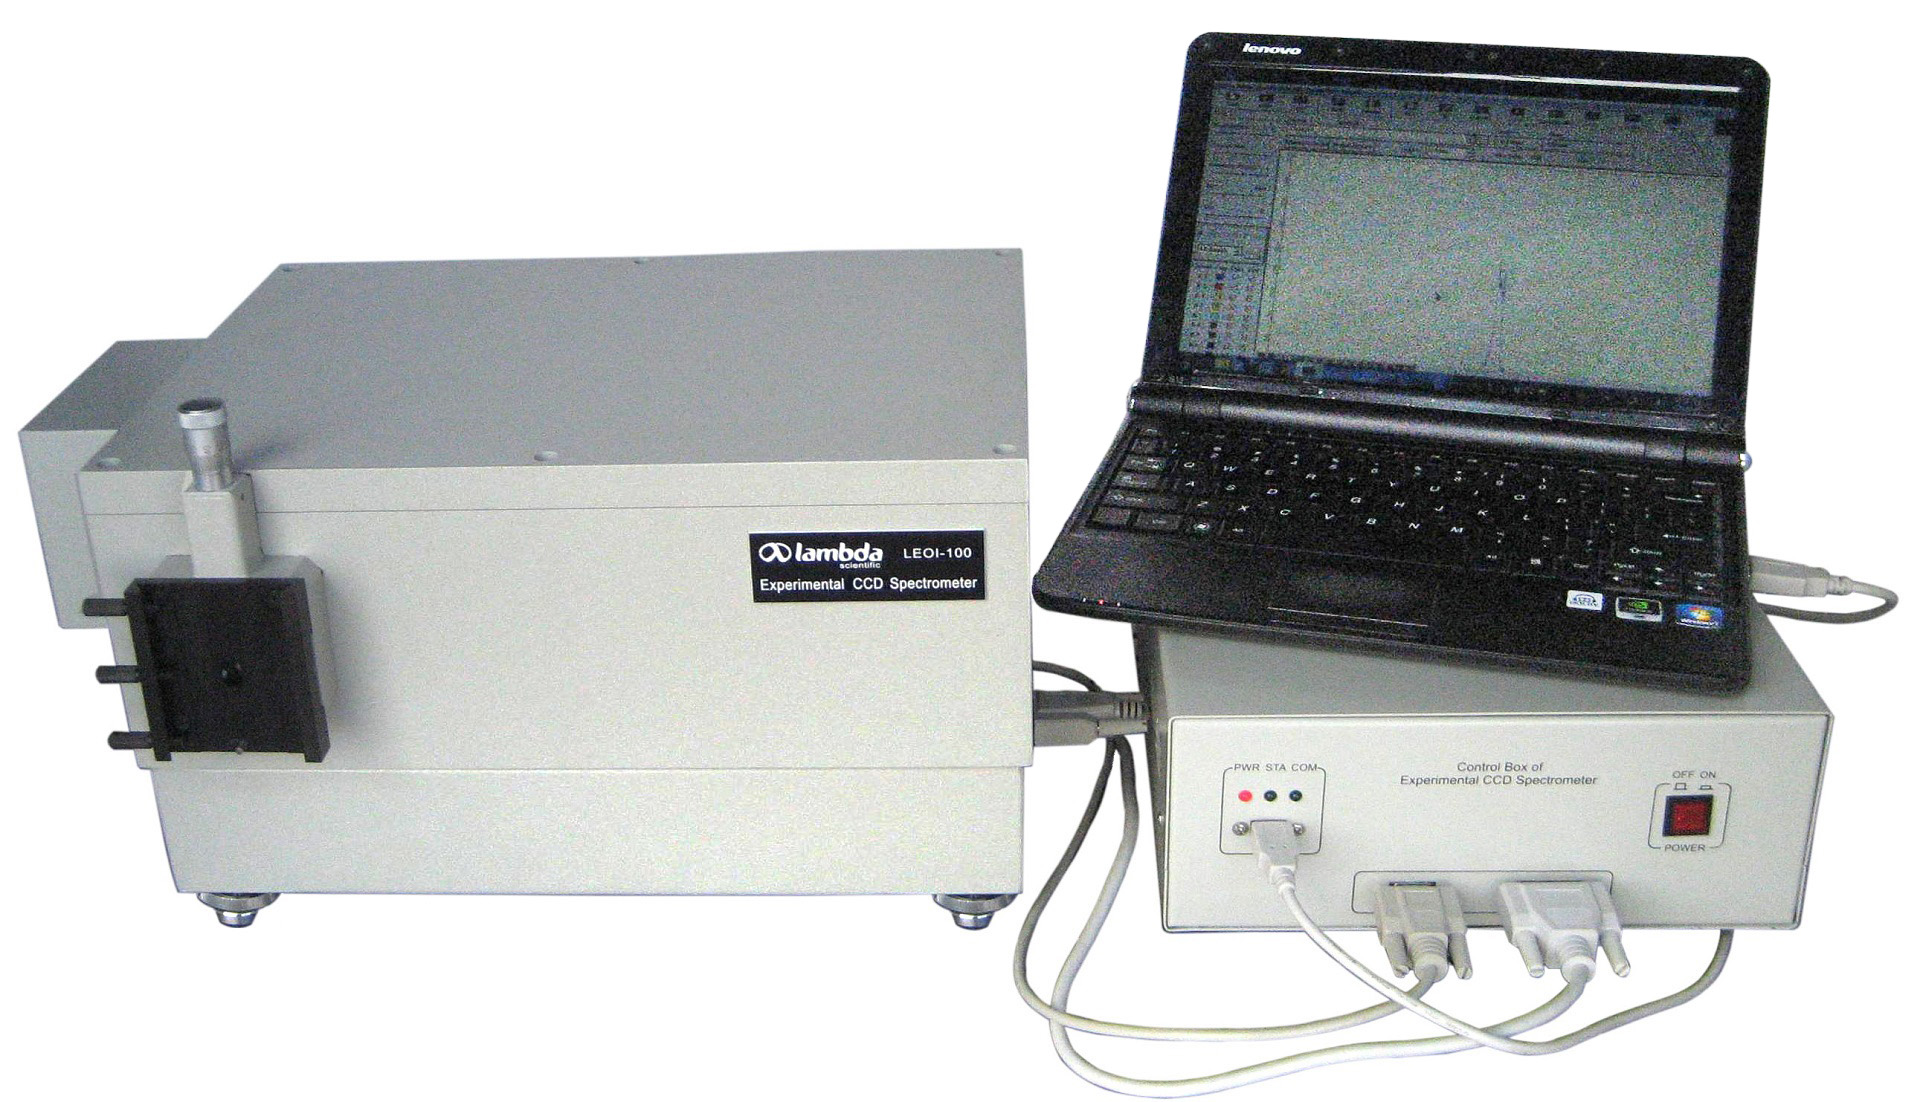 LEOI-100 Experimental CCD Spectrometer